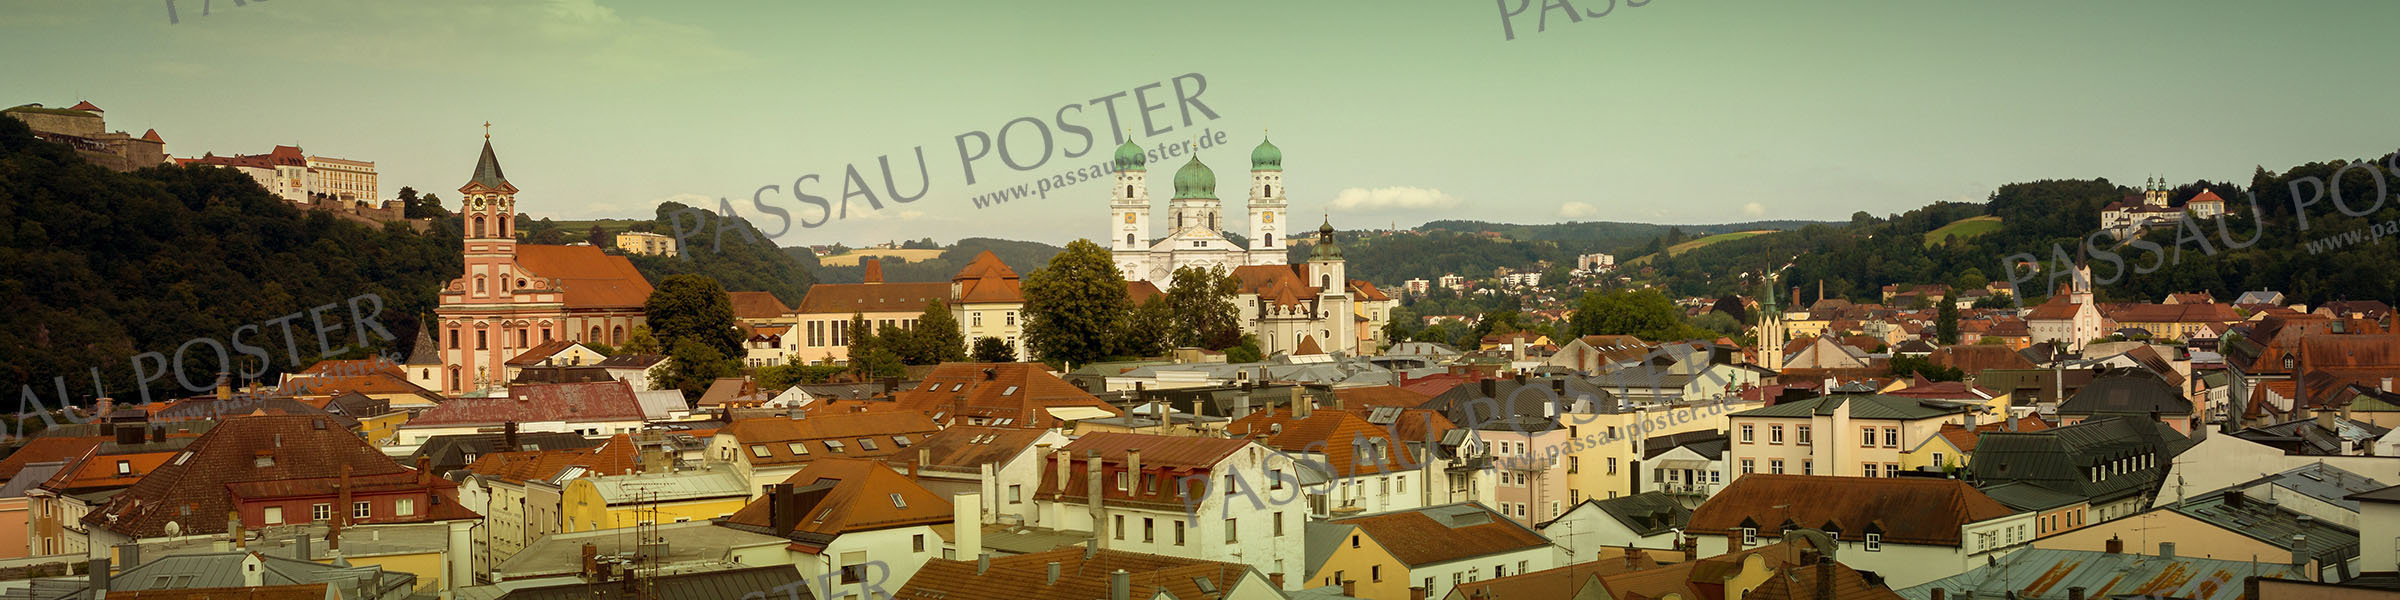 Passau Poster - Passauer Dächermeer